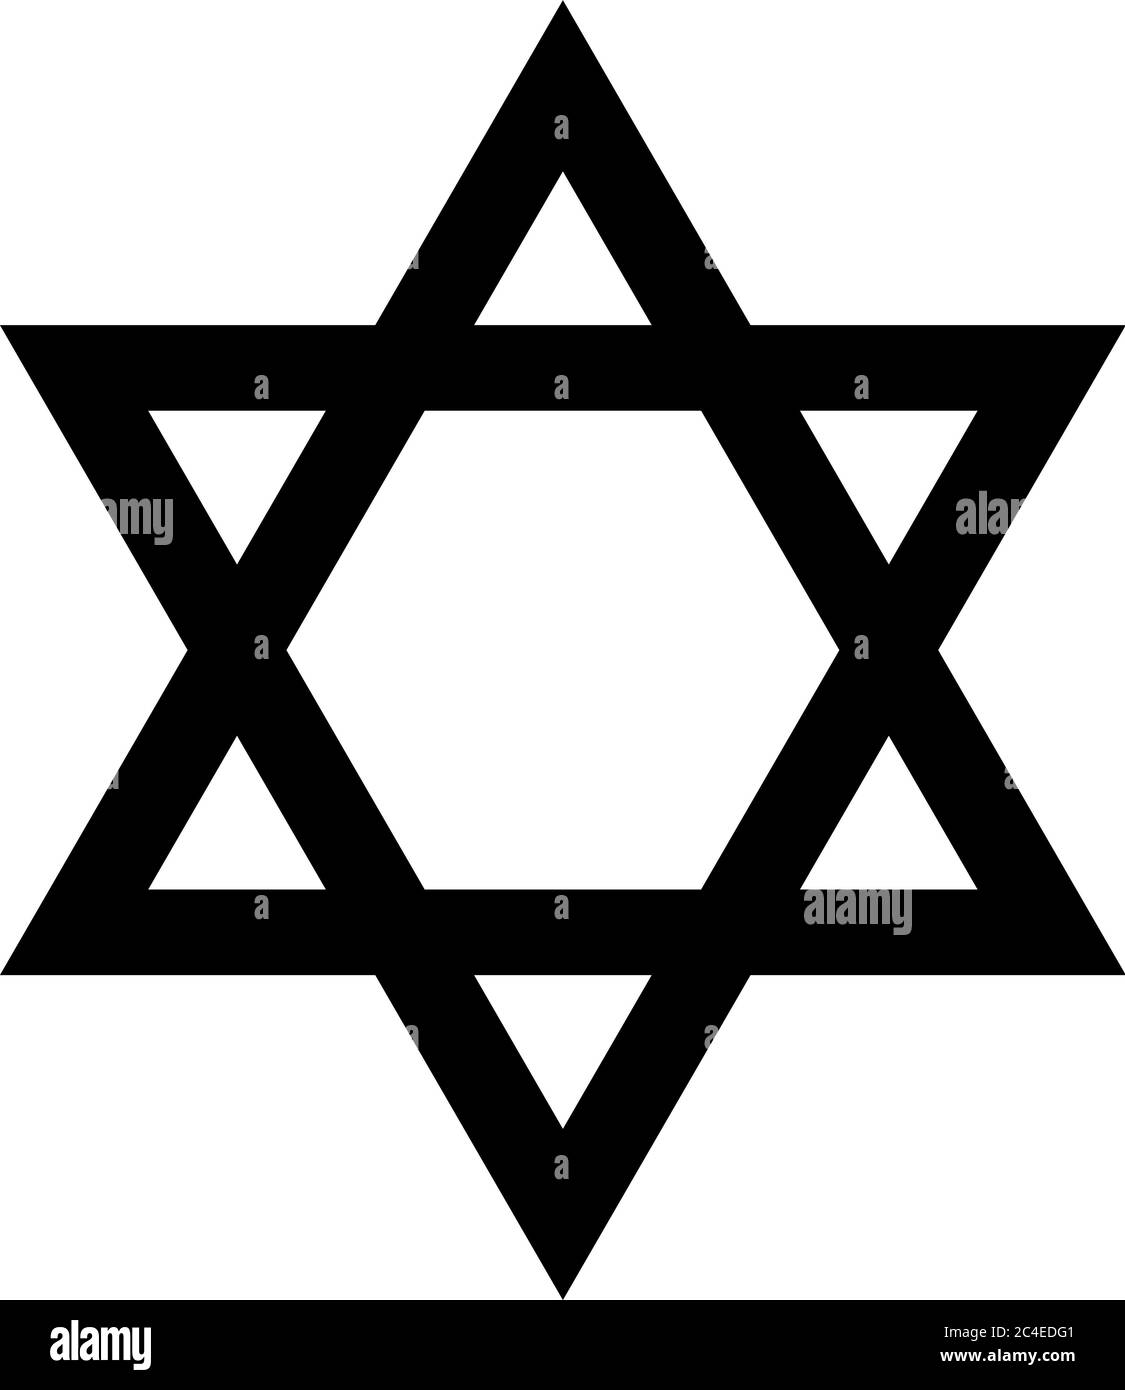 Star of David. Hexagram sign. Symbol of Jewish identity and Judaism. Simple flat black illustration. Stock Vector